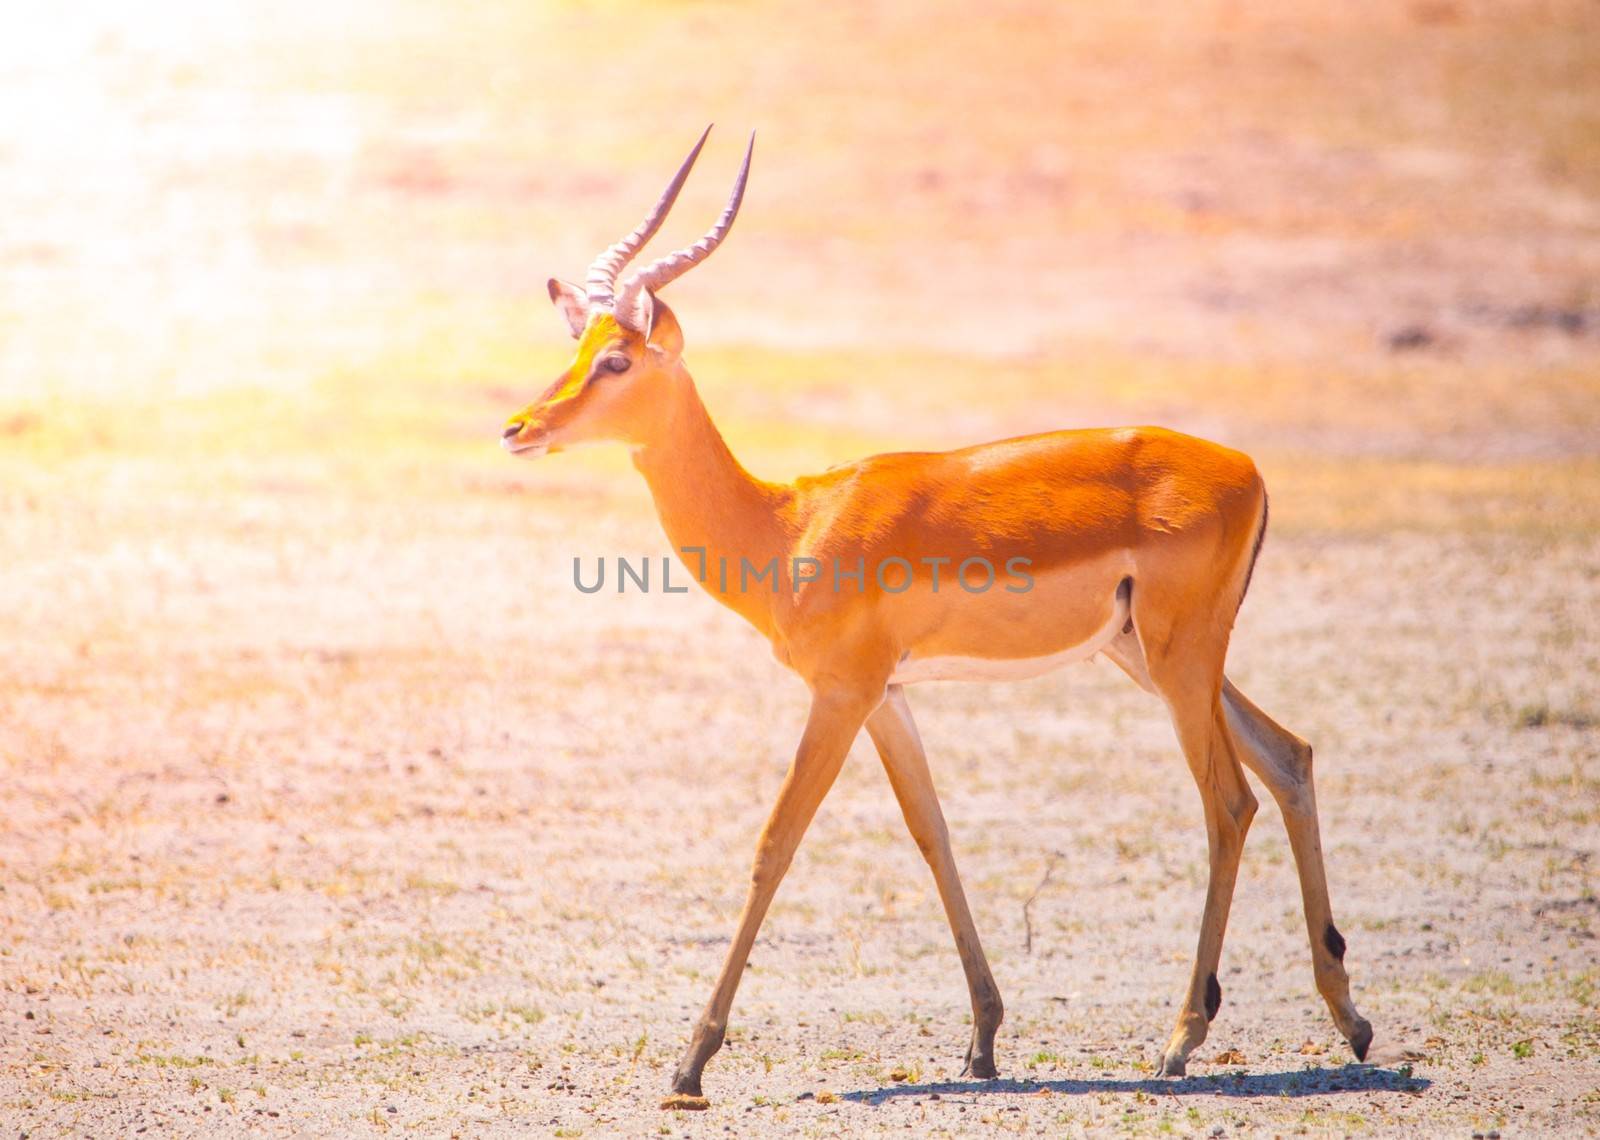 Young impala on safari game drive, Okavango region, Botswana by pyty